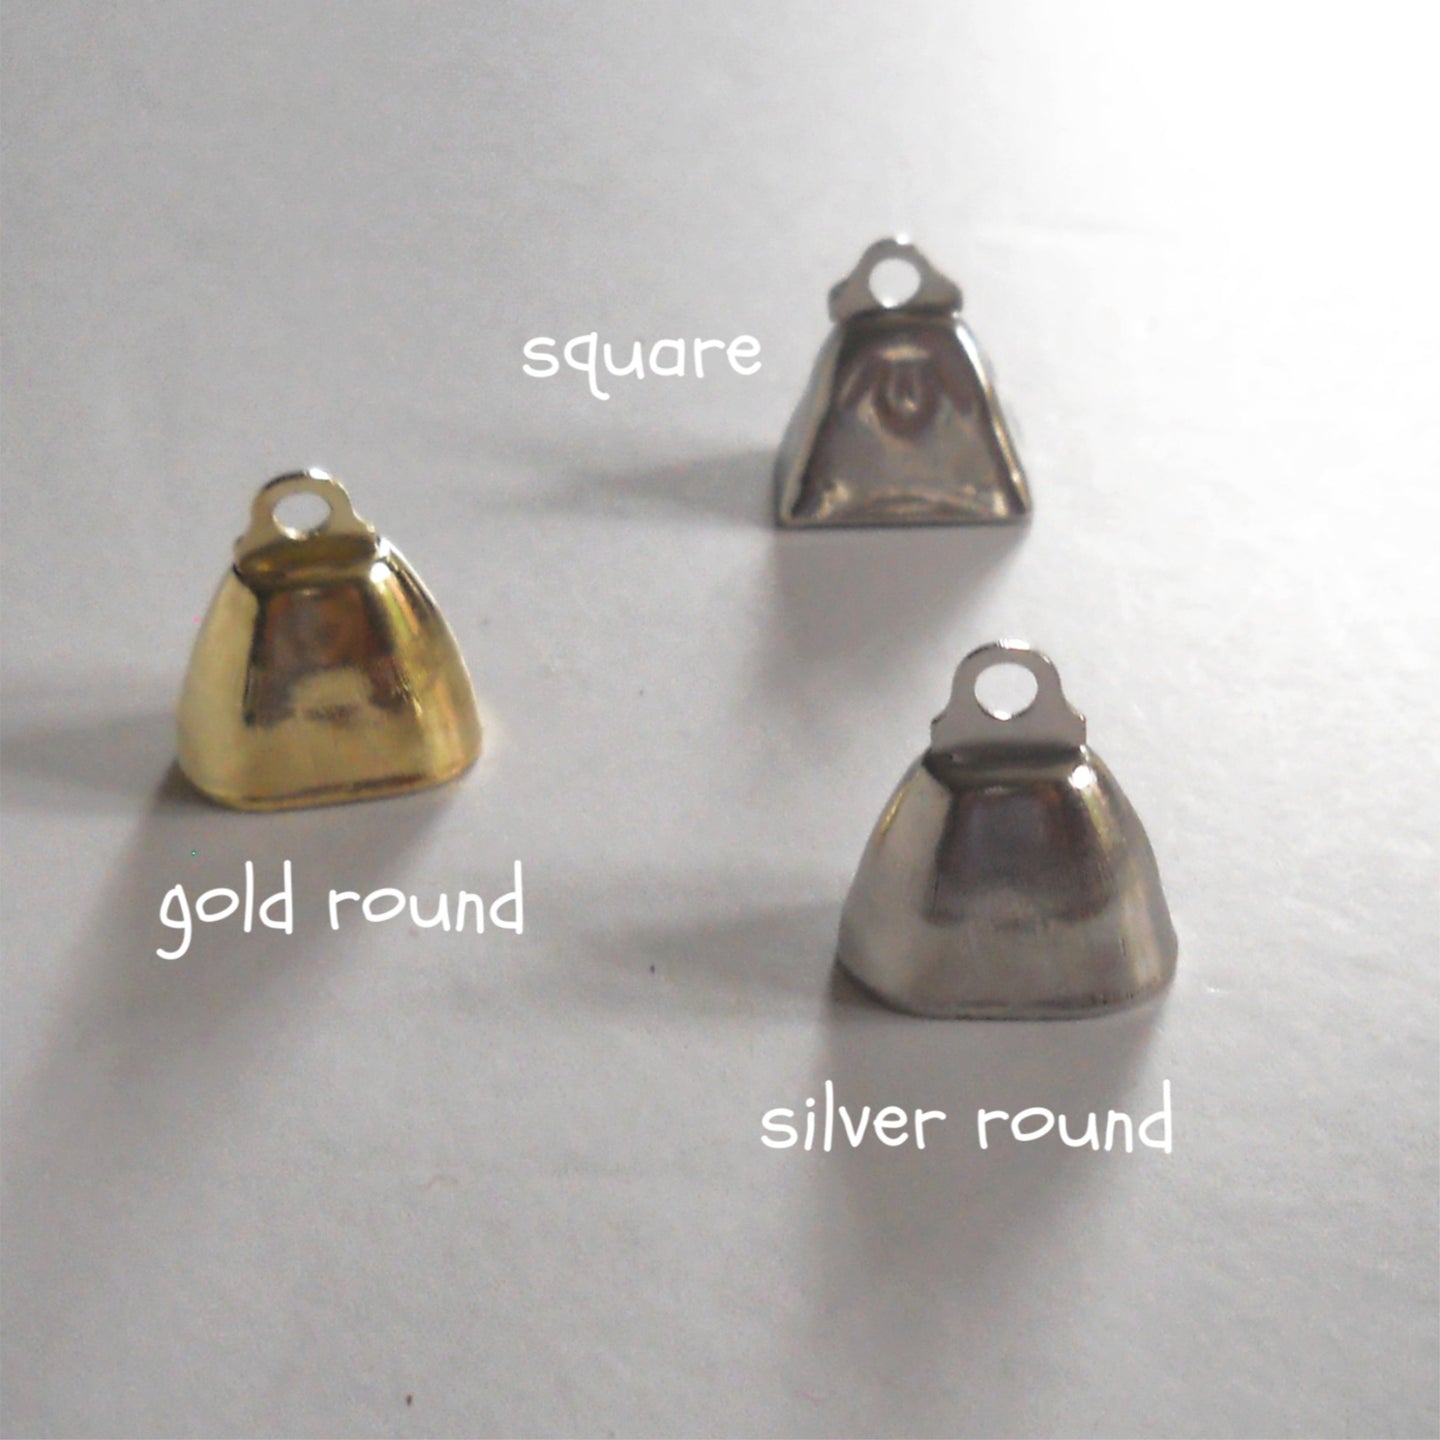 15 mm cow bells, miniature bells